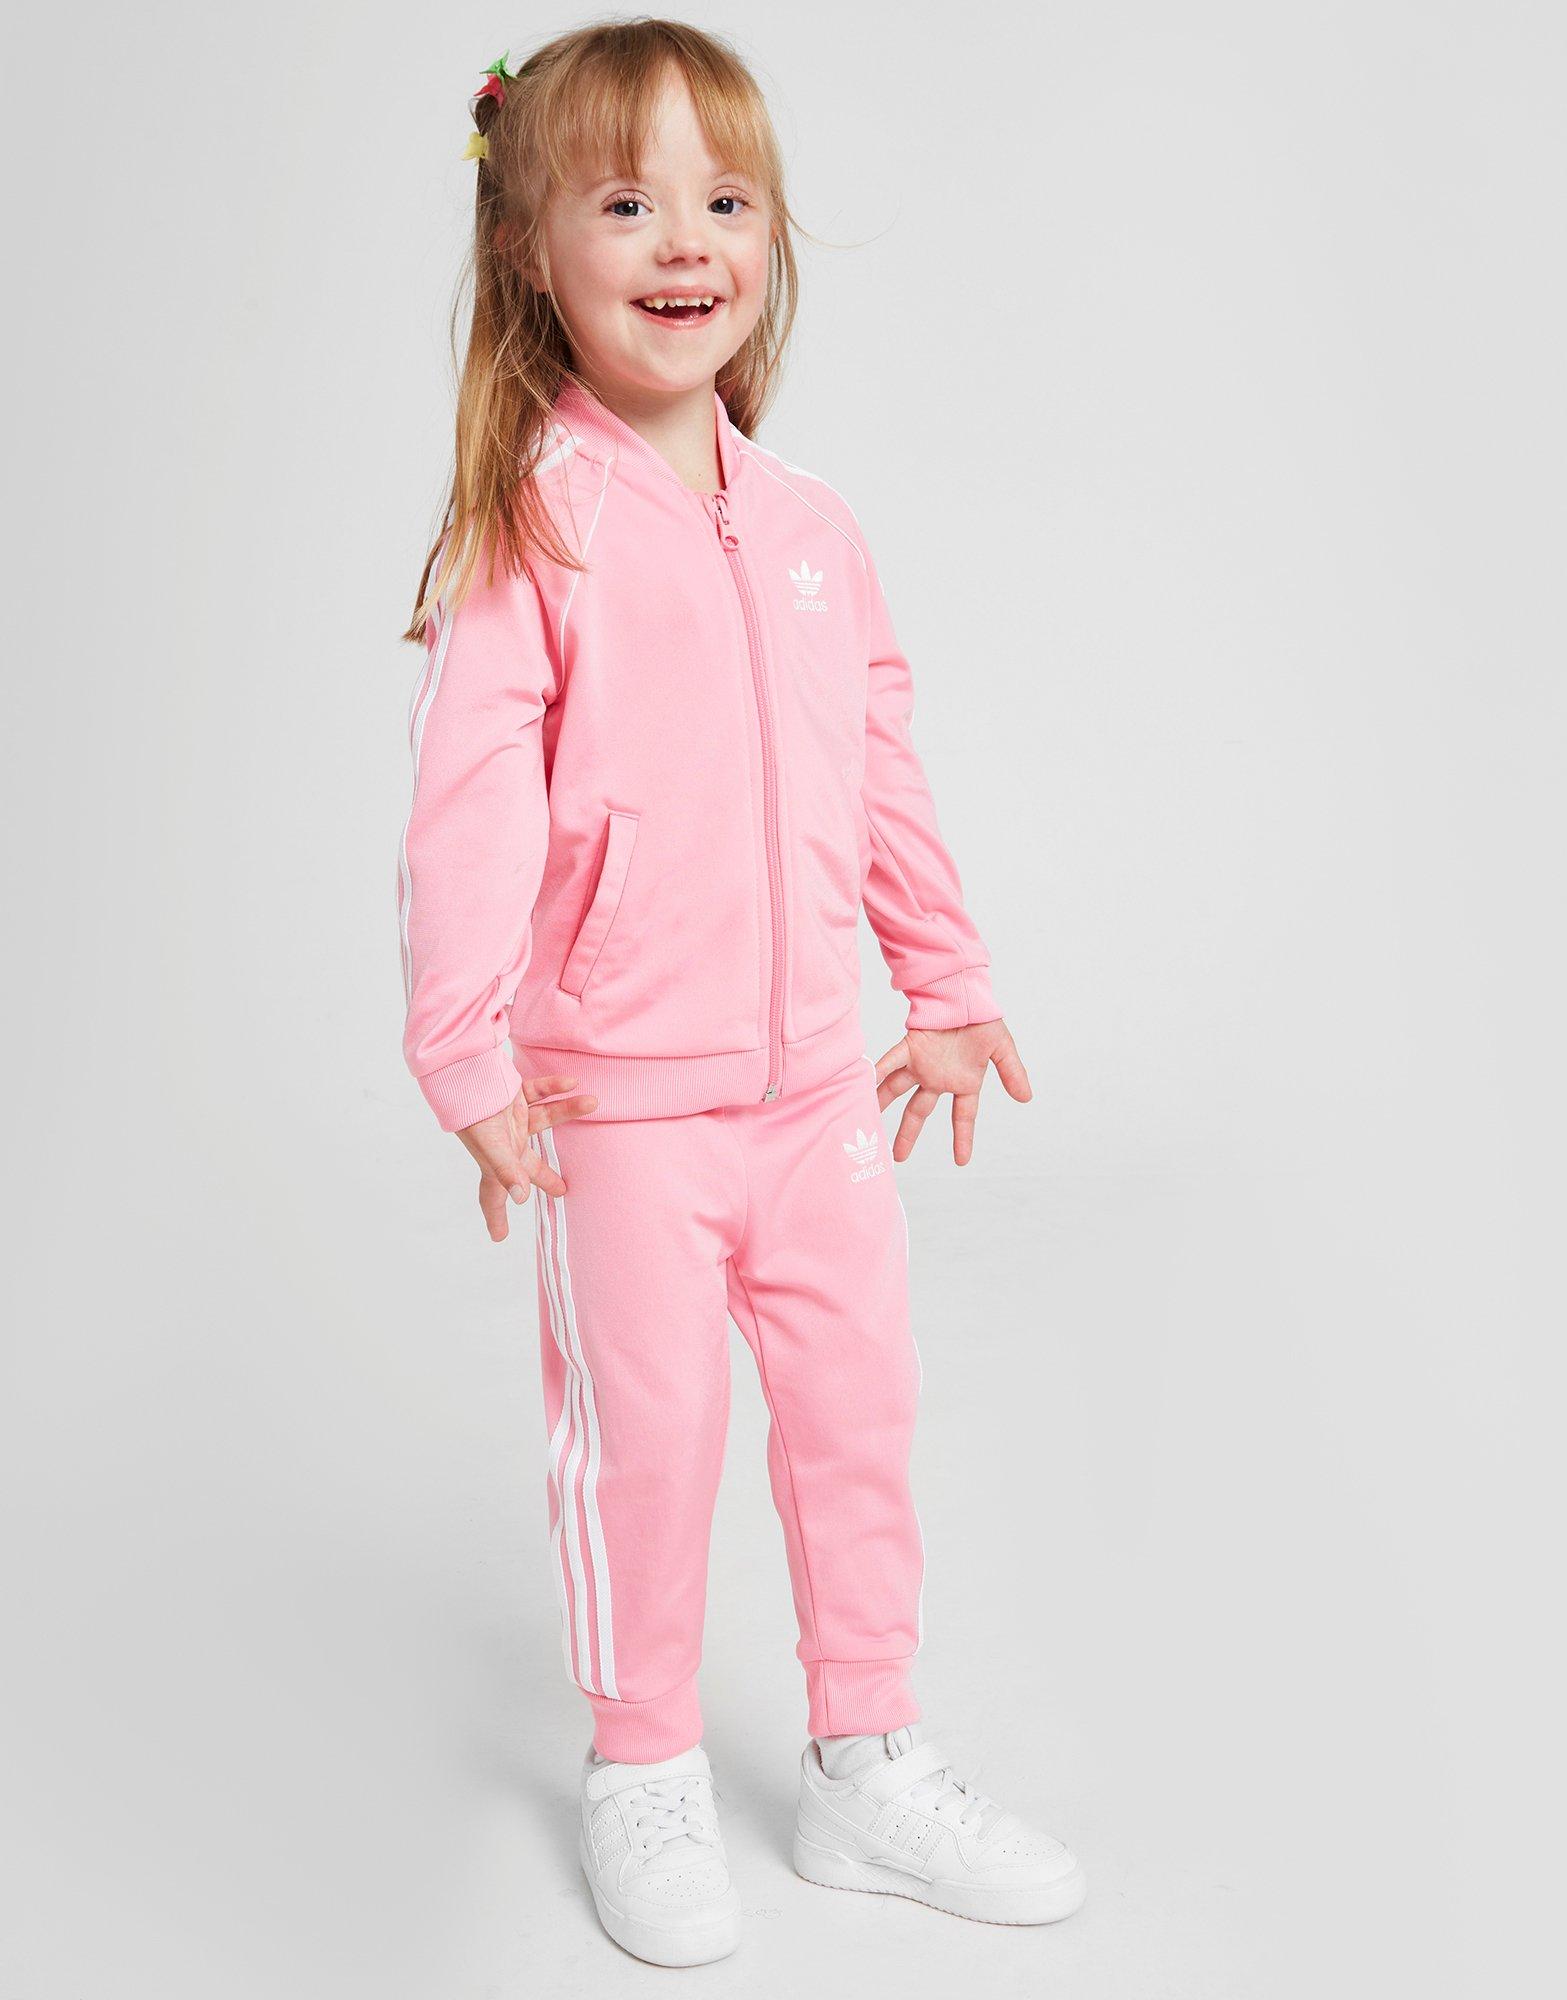 Bliss Pink adidas Originals Girls' SST Full Zip Tracksuit Infant | JD Sports